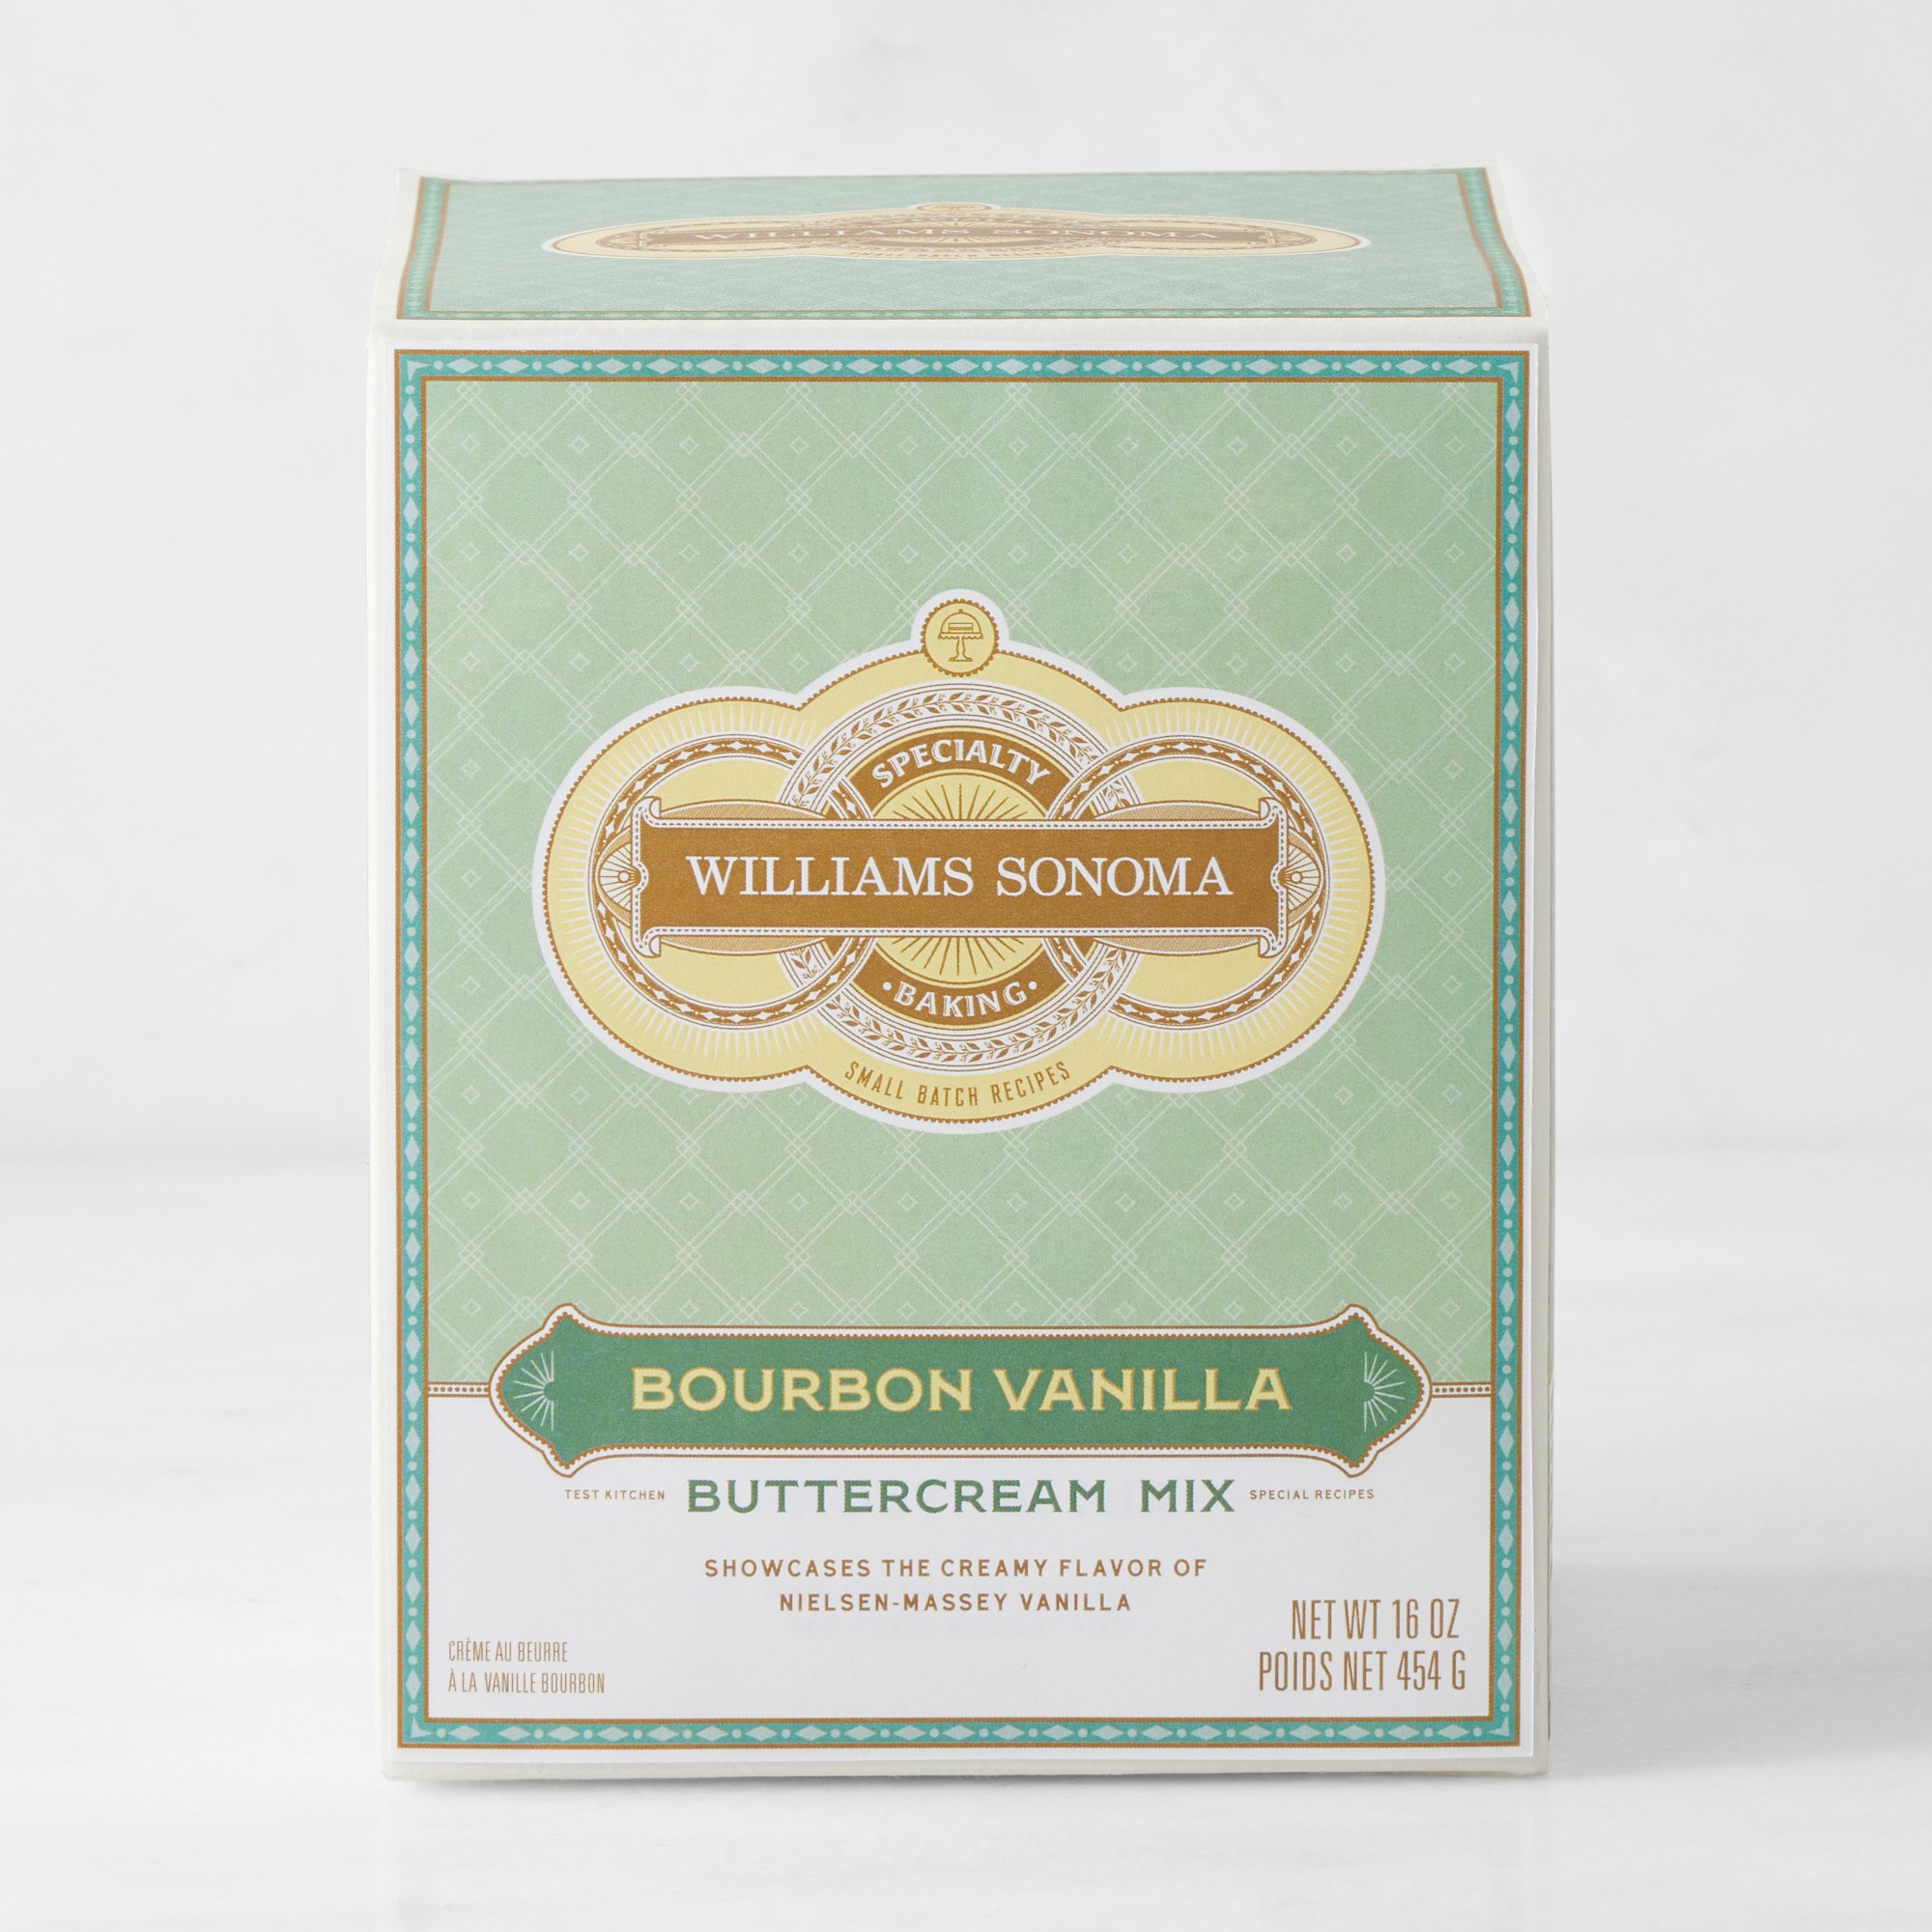 Williams Sonoma Bourbon Vanilla Buttercream Mix